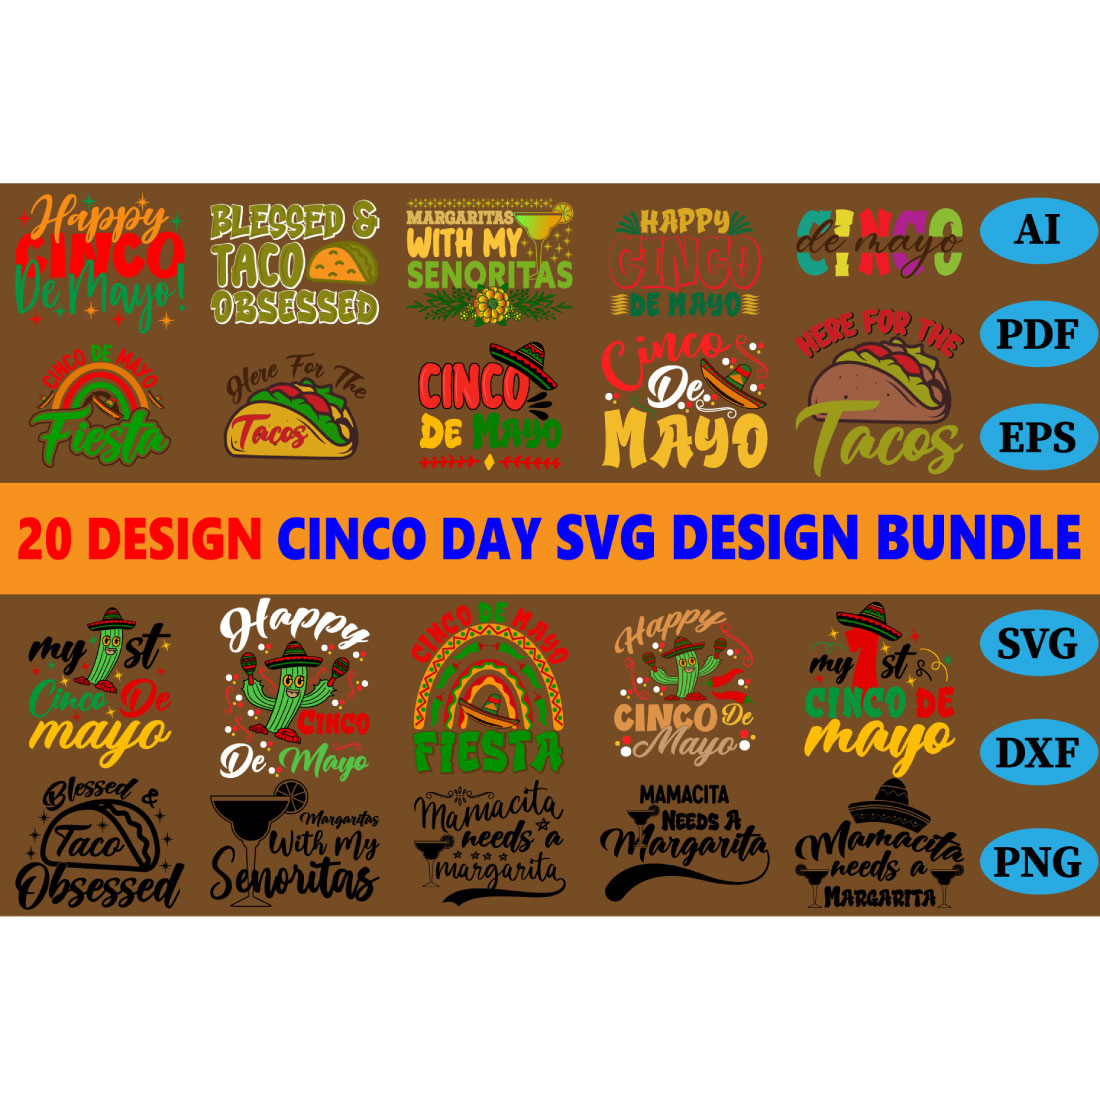 Chinco Day SVG Design Bundle cover image.